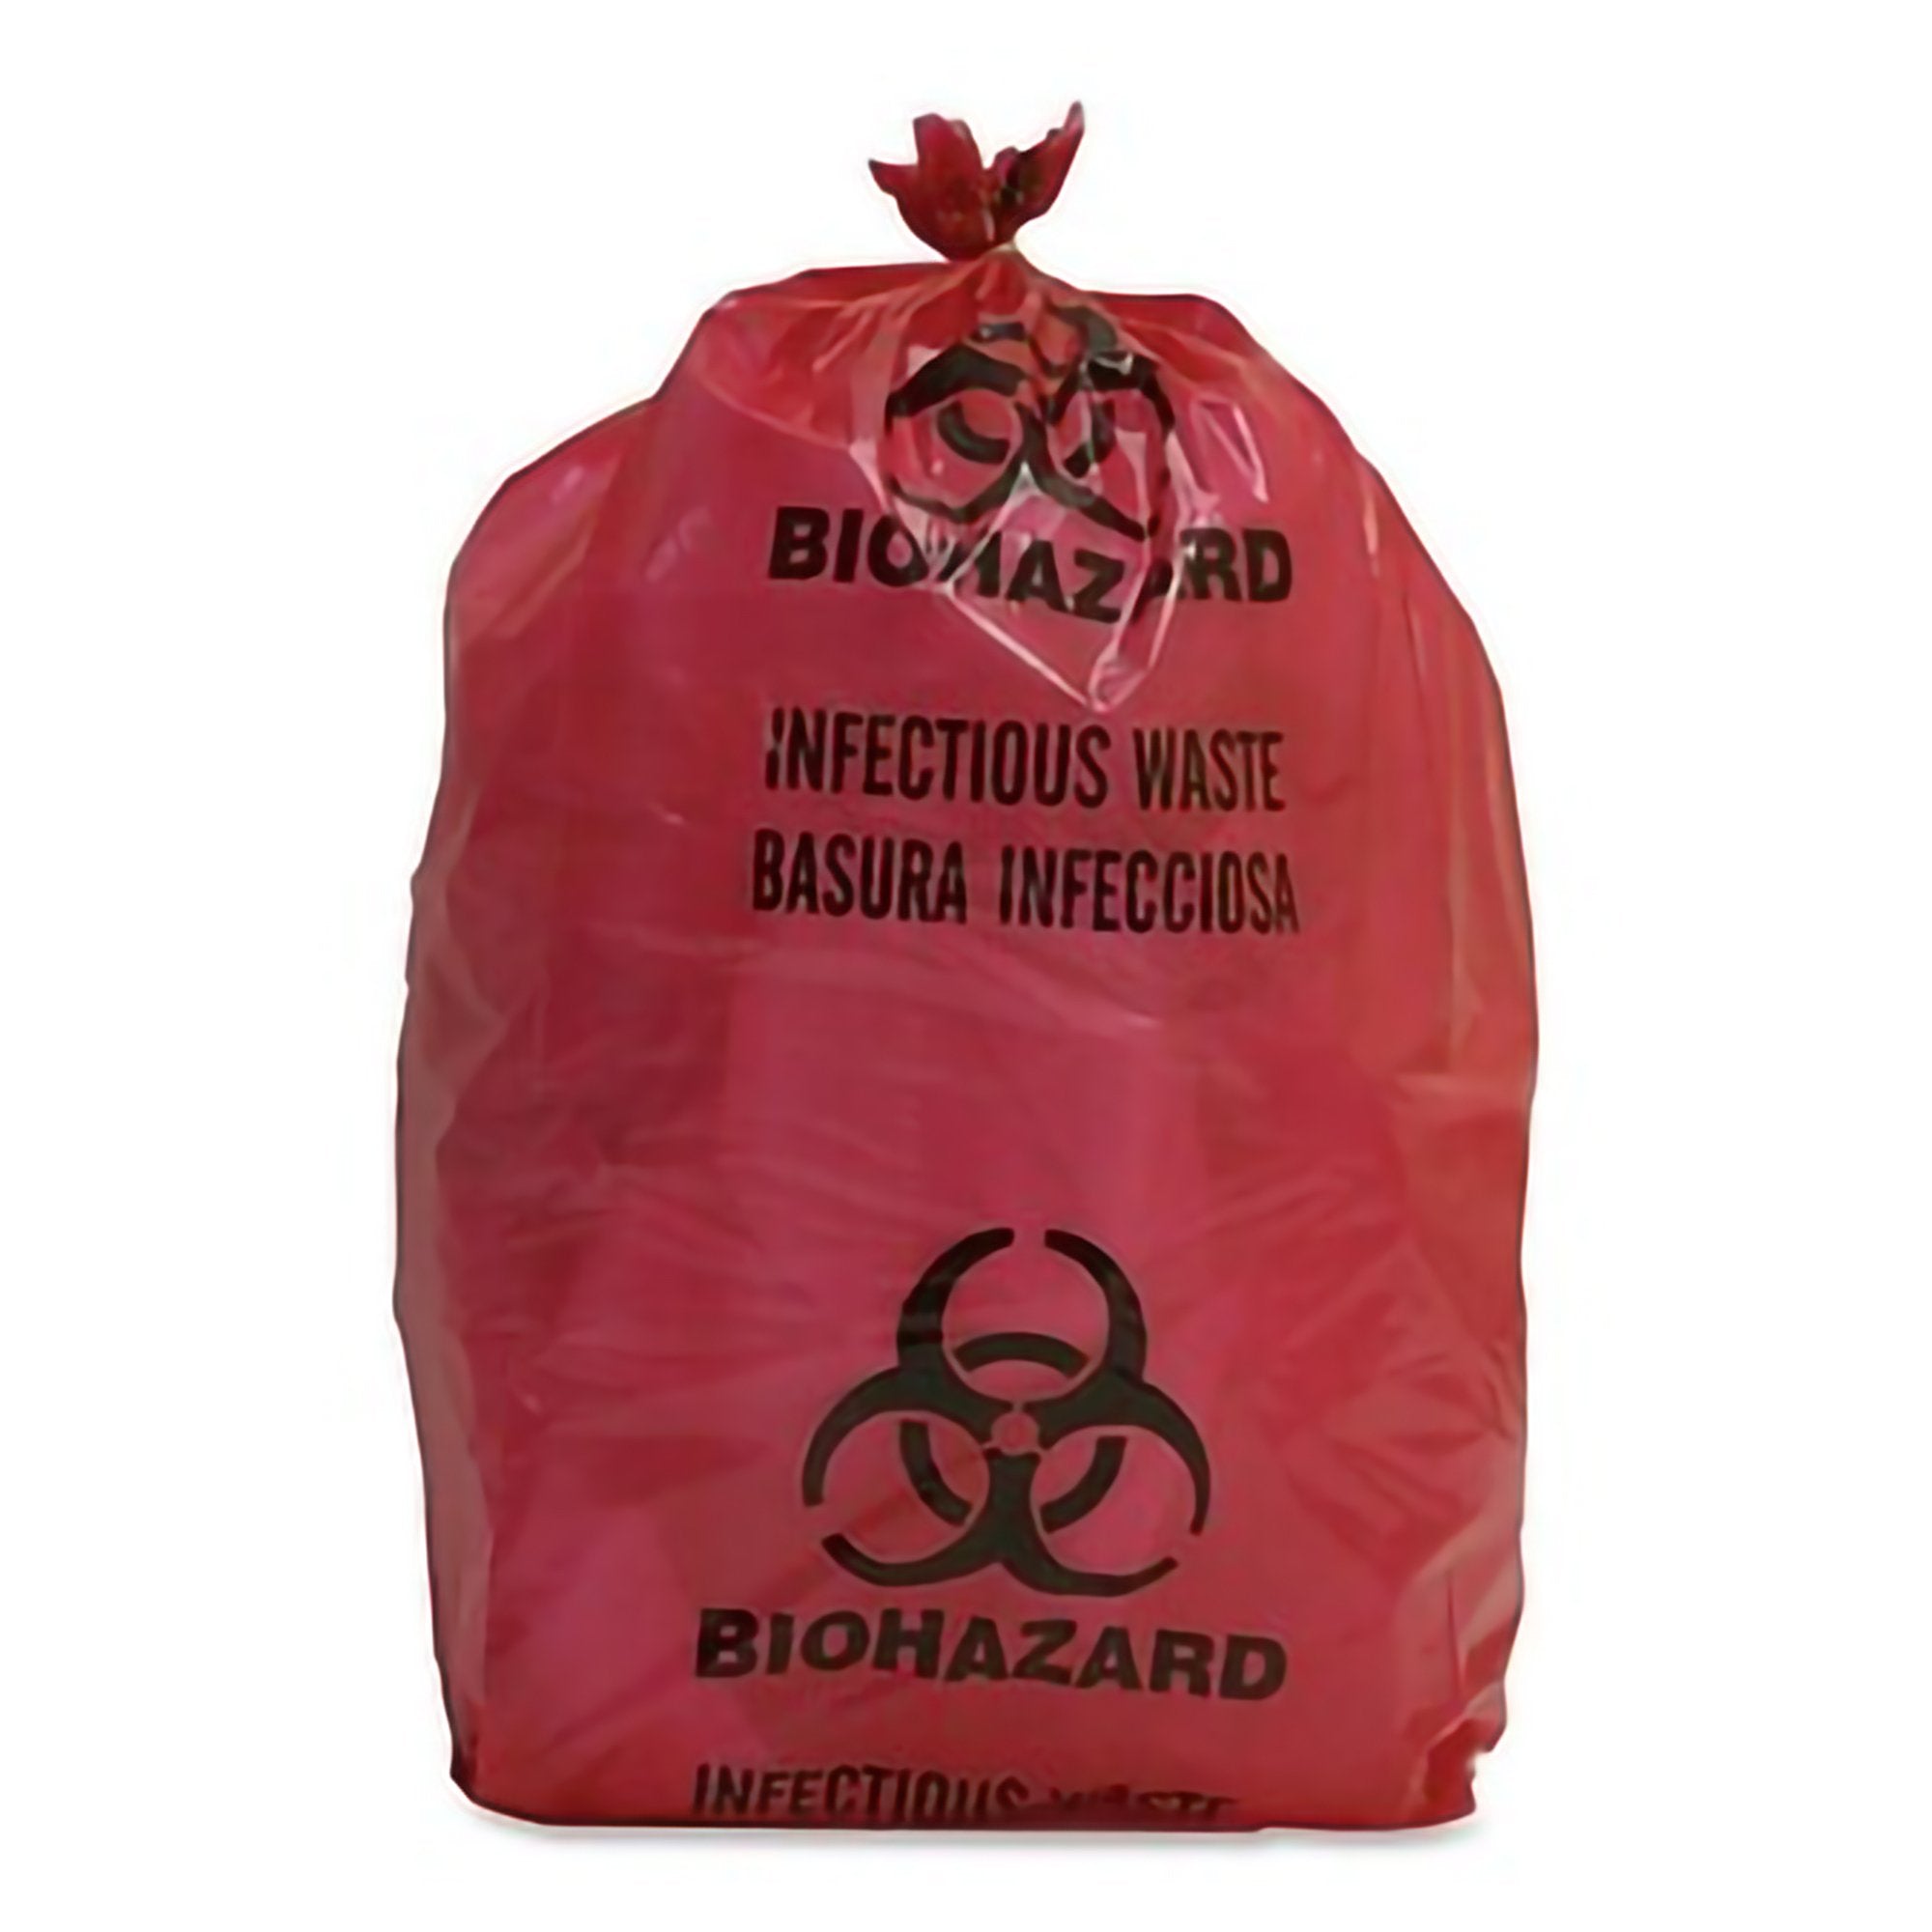 Biohazard Waste Bag 5 gal. Red Bag 15-3/4 X 23-5/8 Inch